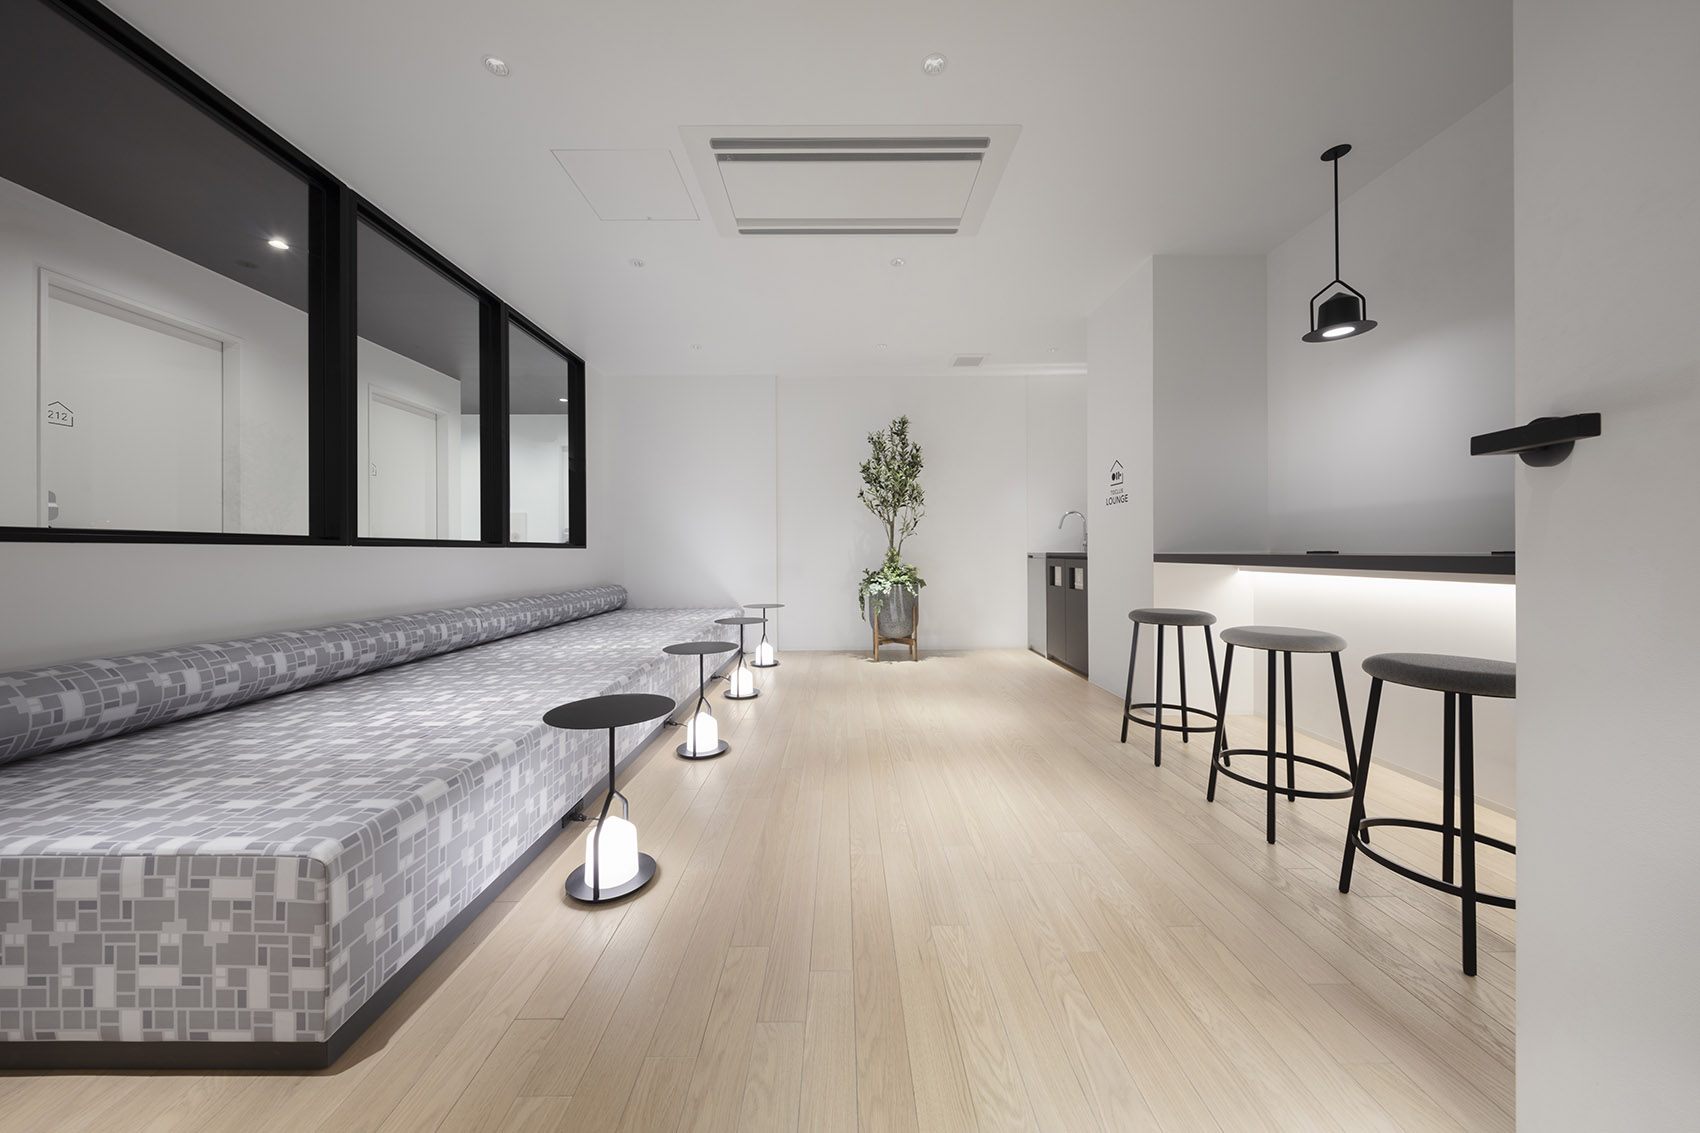 MARUI TOCLUS综合共享住宅，东京/将商业空间转化成展示新生活方式和社区文化的场所-43